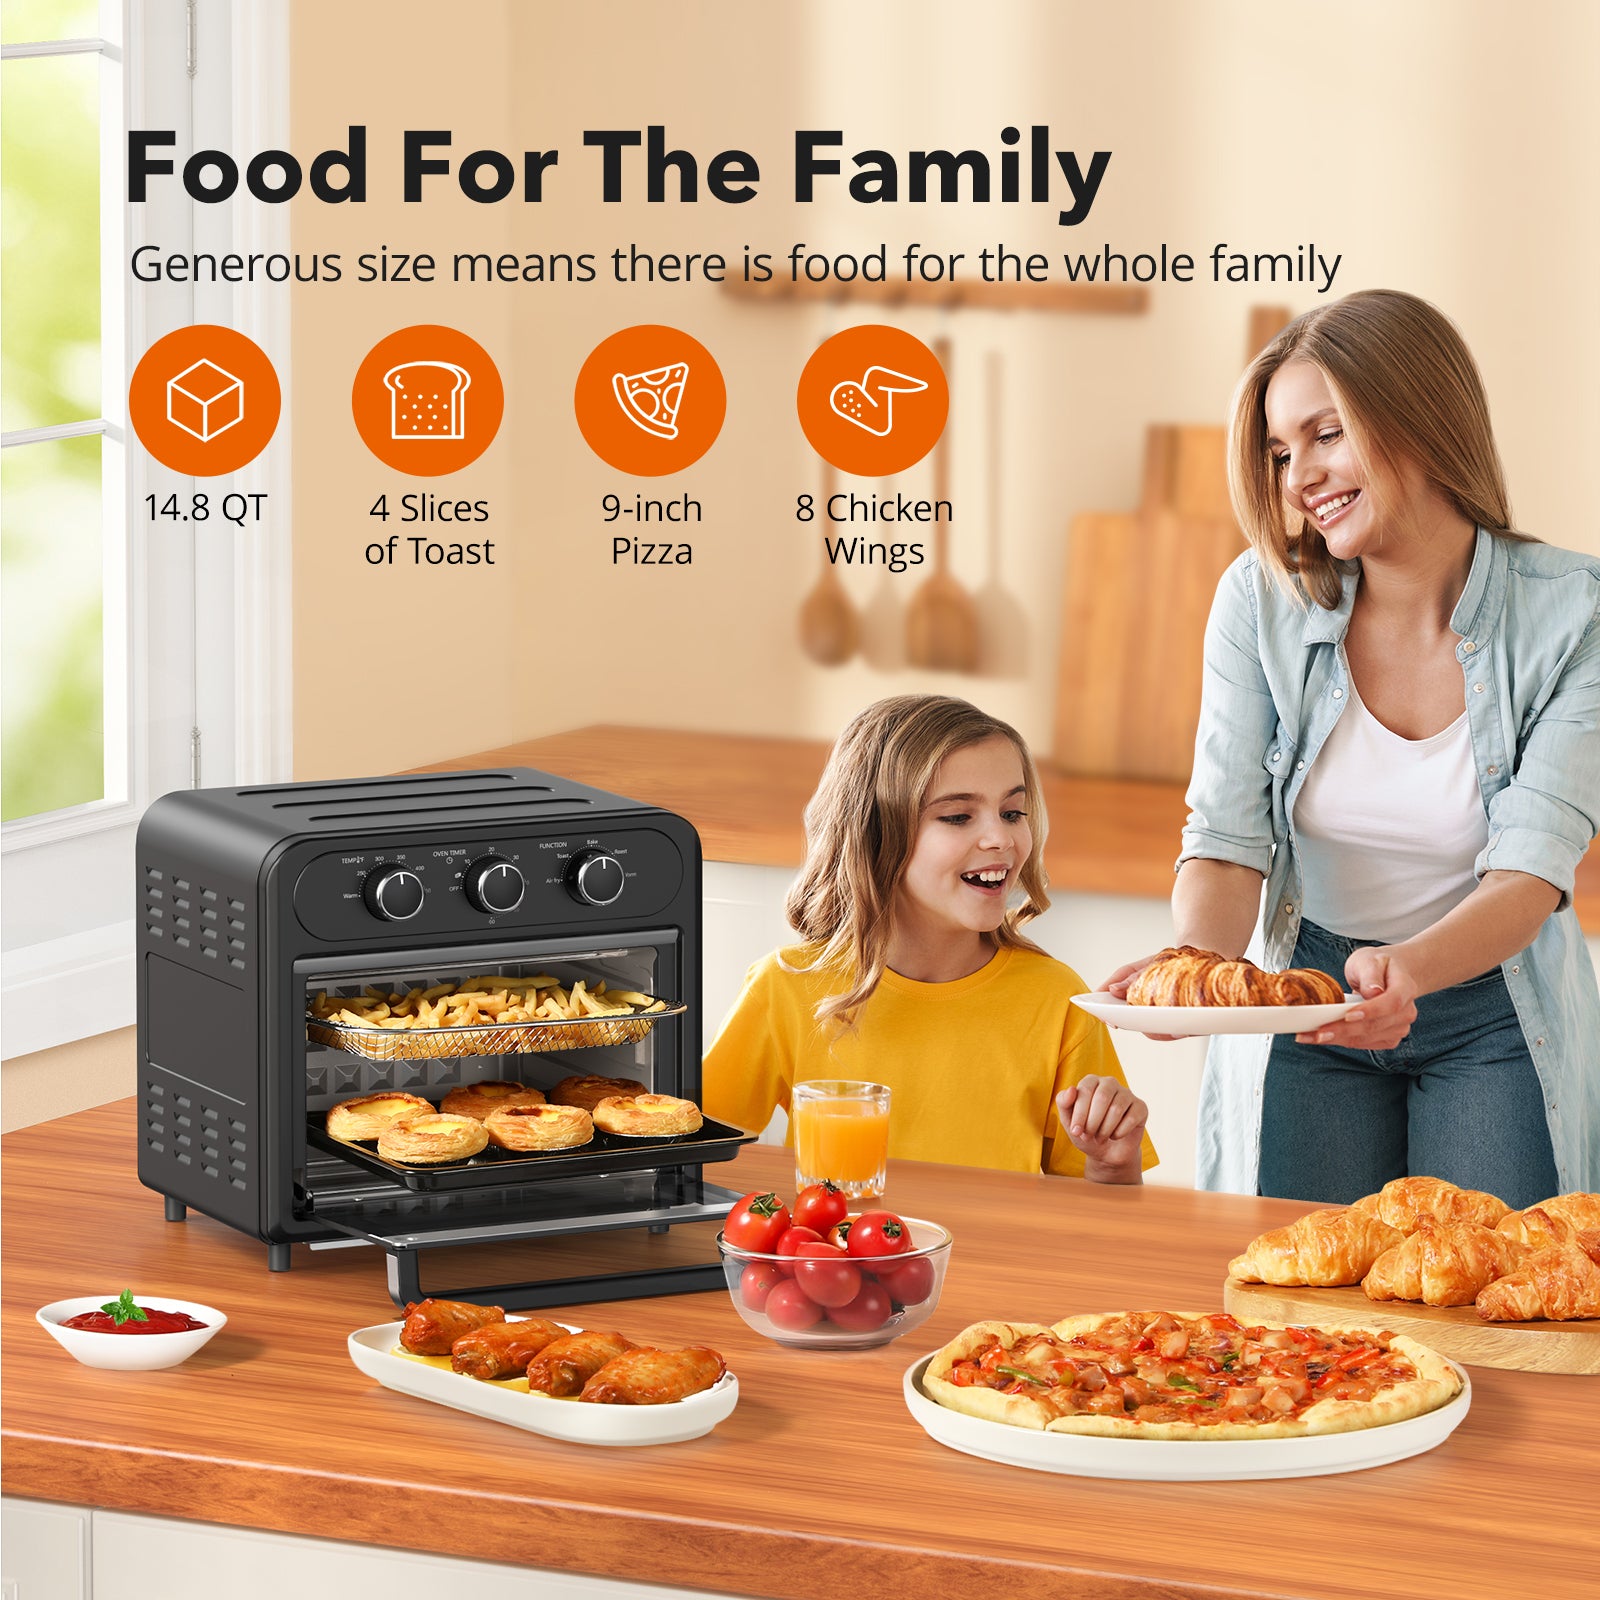 Dash Family Size Air Fryer (V2) 